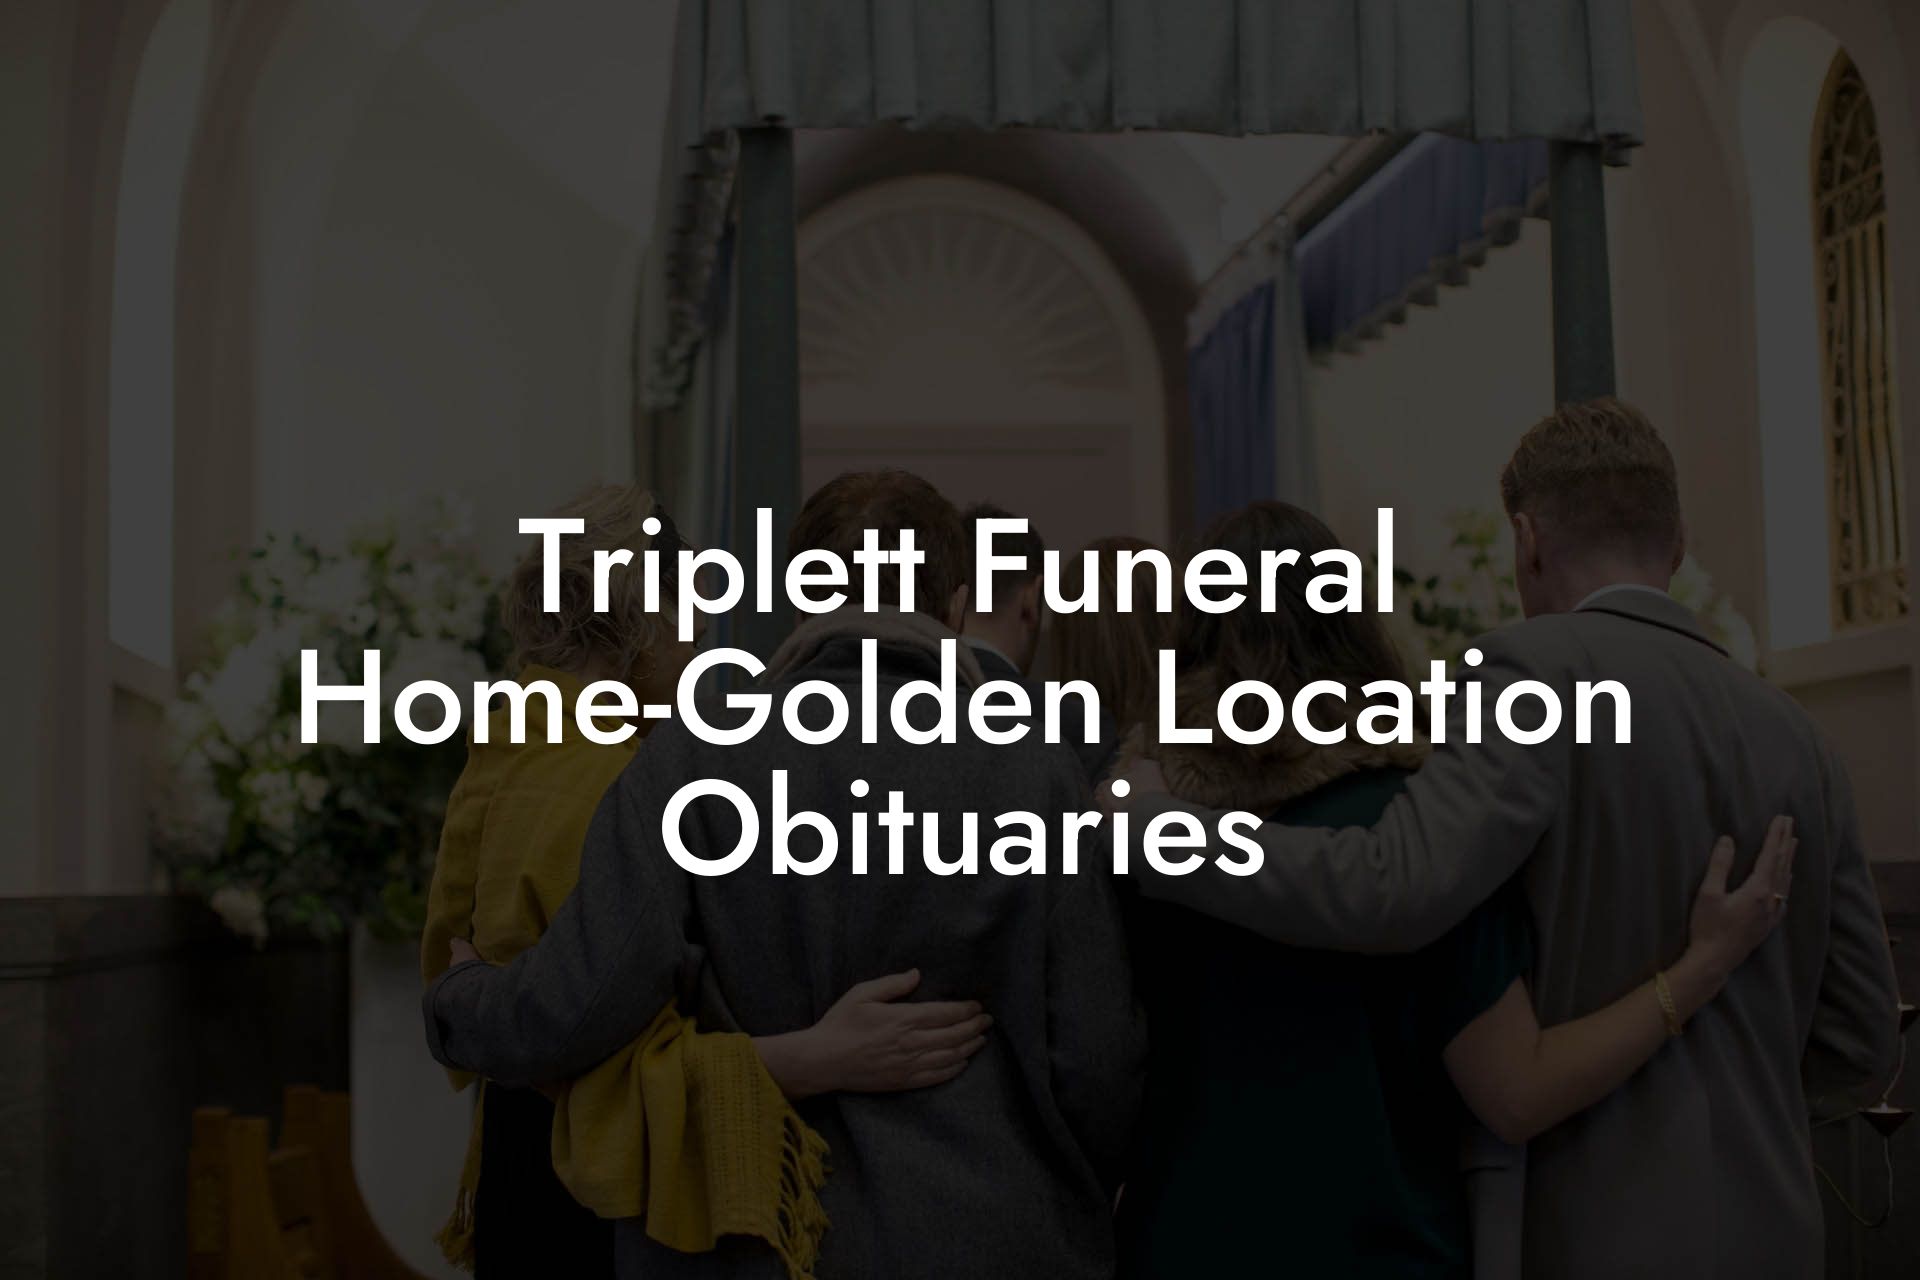 Triplett Funeral Home-Golden Location Obituaries